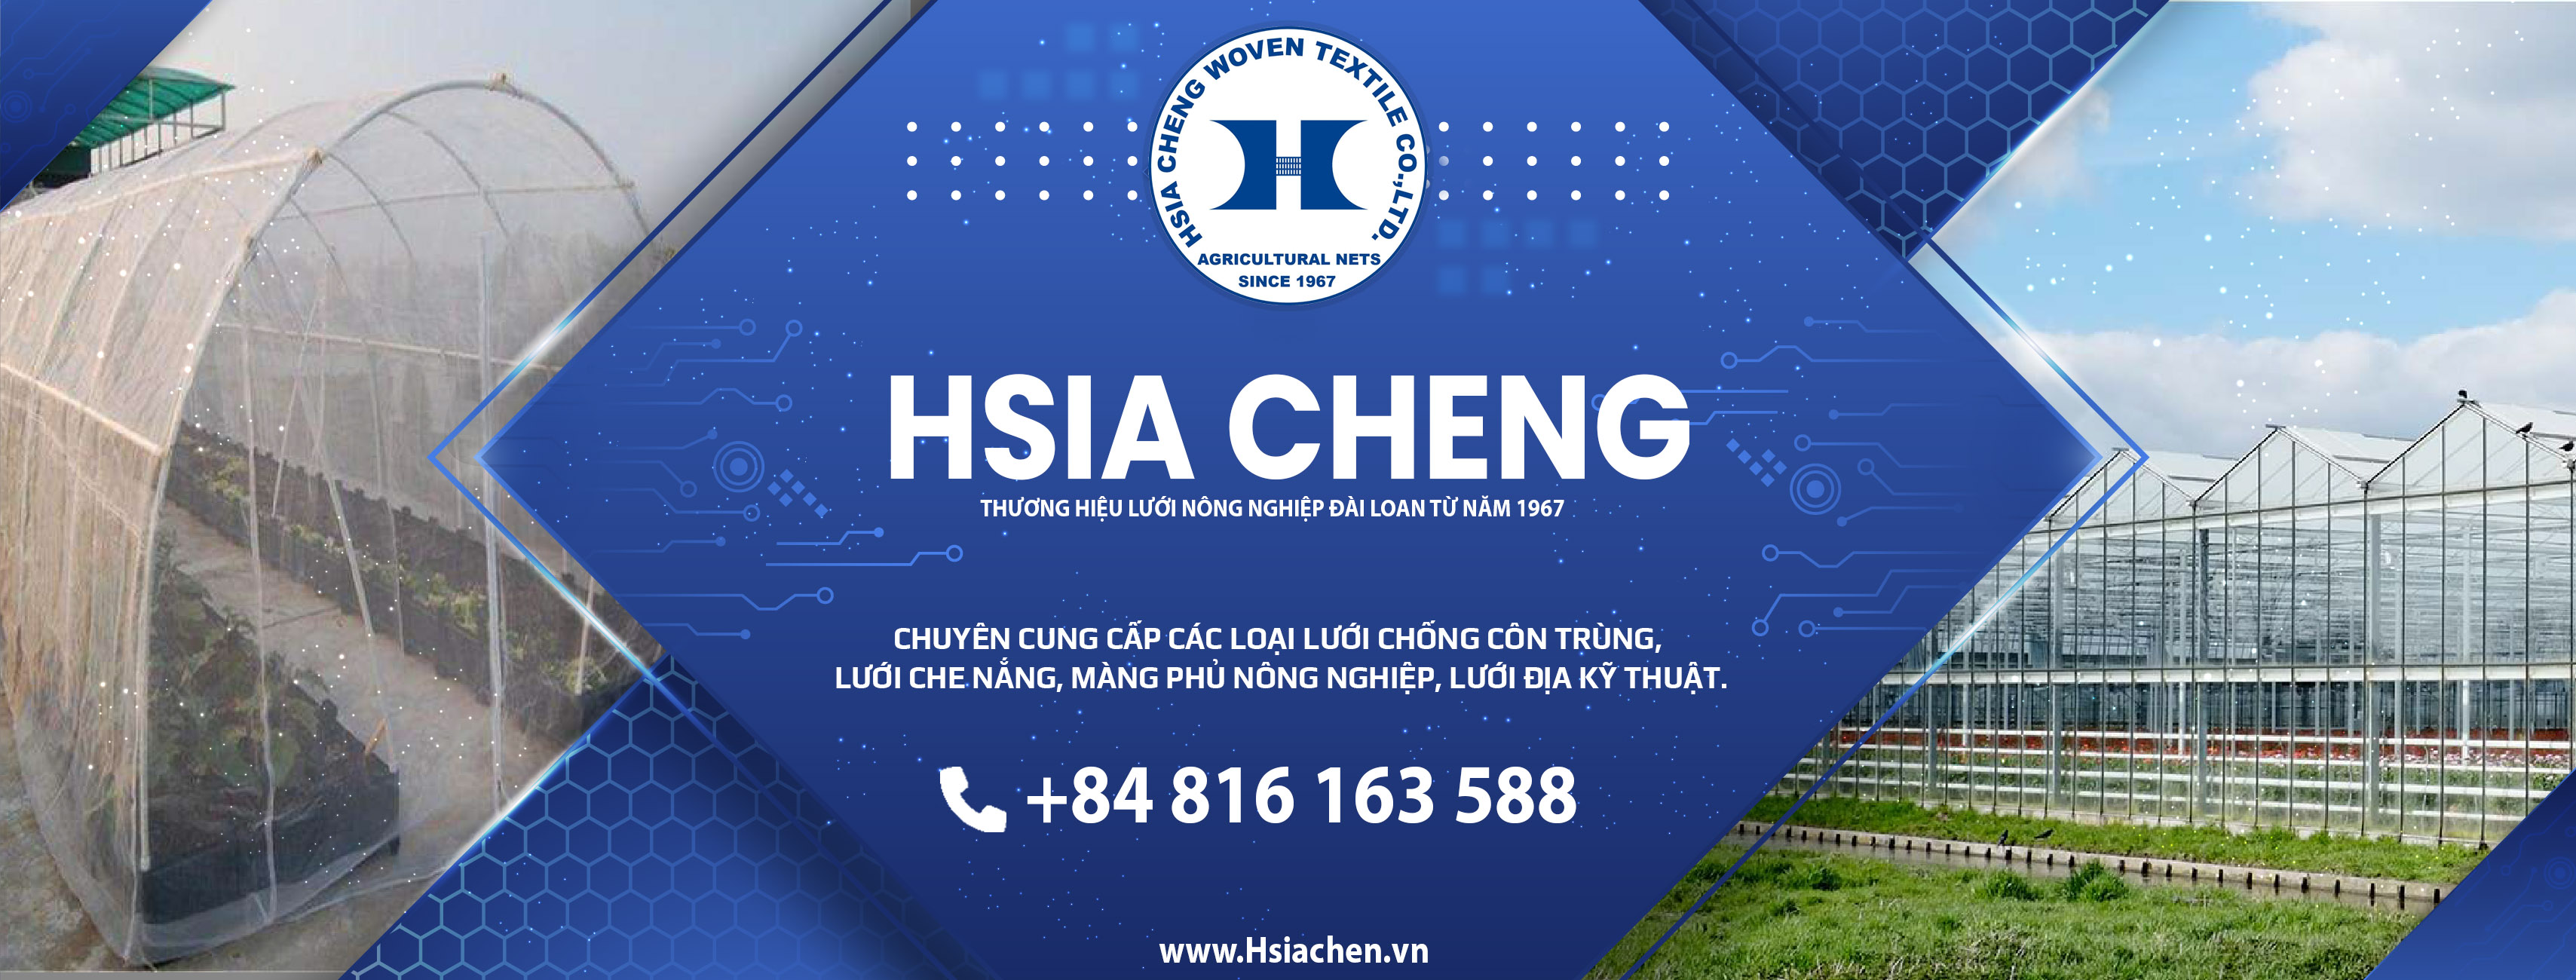 Hsia ChengHsia Cheng Woven Textile Việt Nam